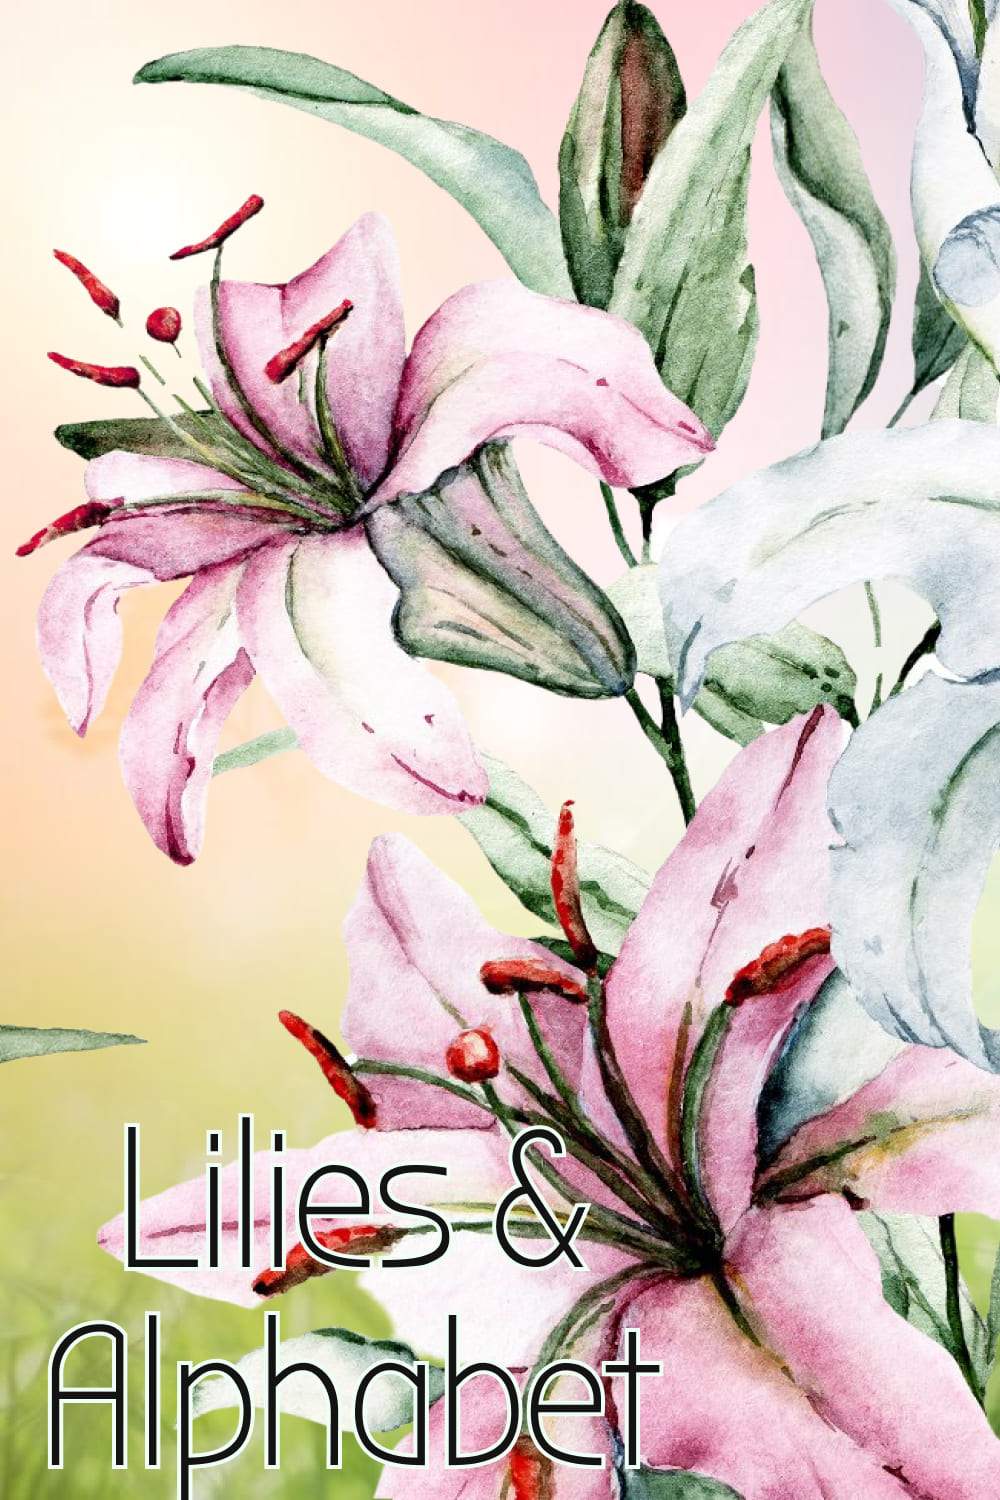 Watercolor Flowers Lilies & Alphabet - preview image.